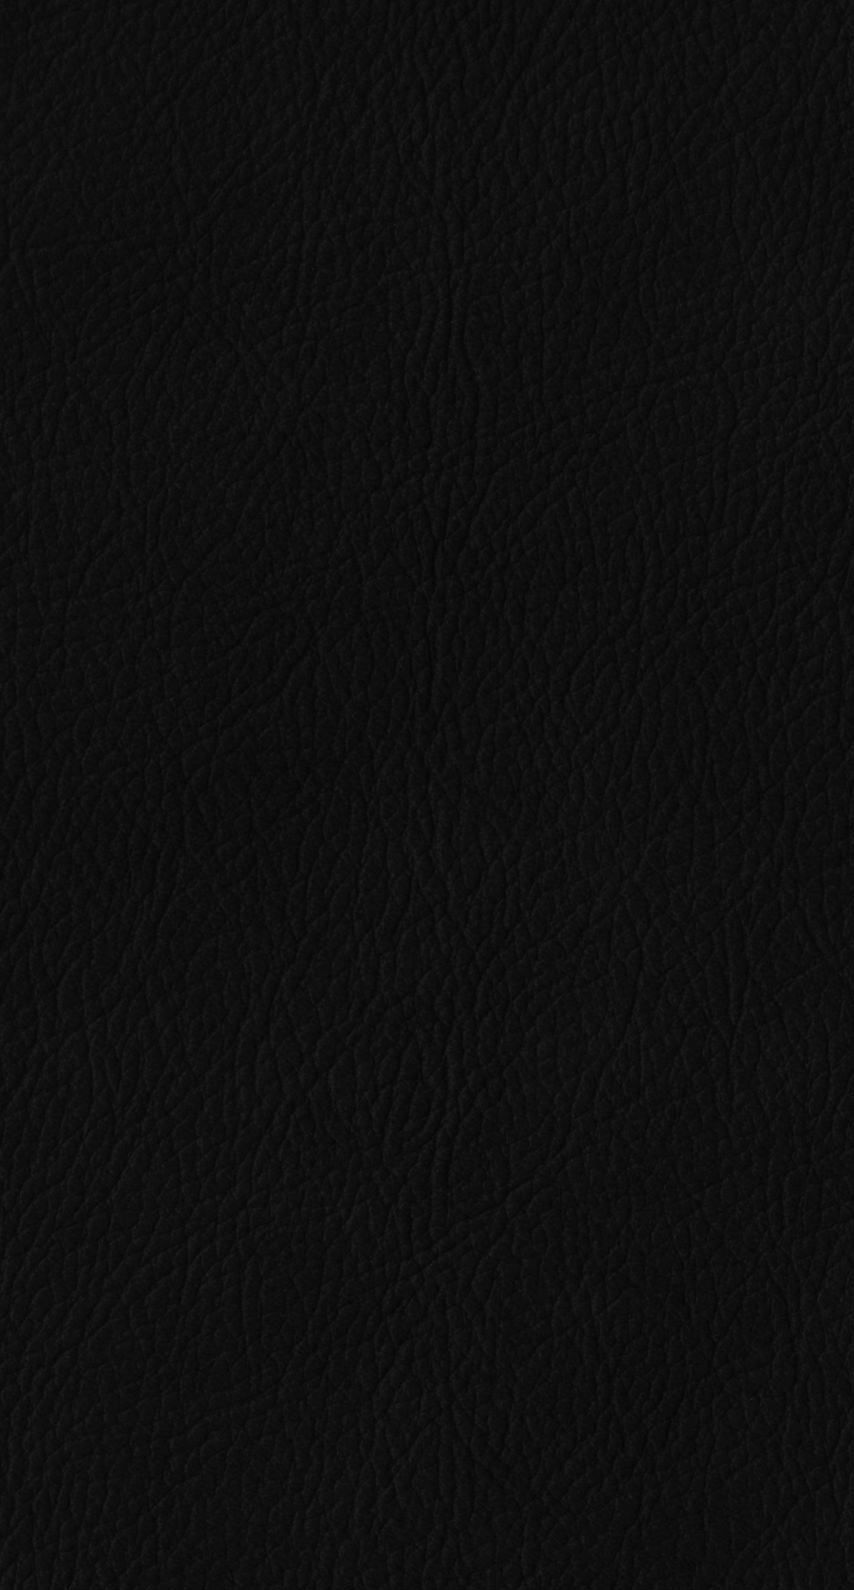 Iphone 壁紙 真っ黒 無料のhd壁紙画像